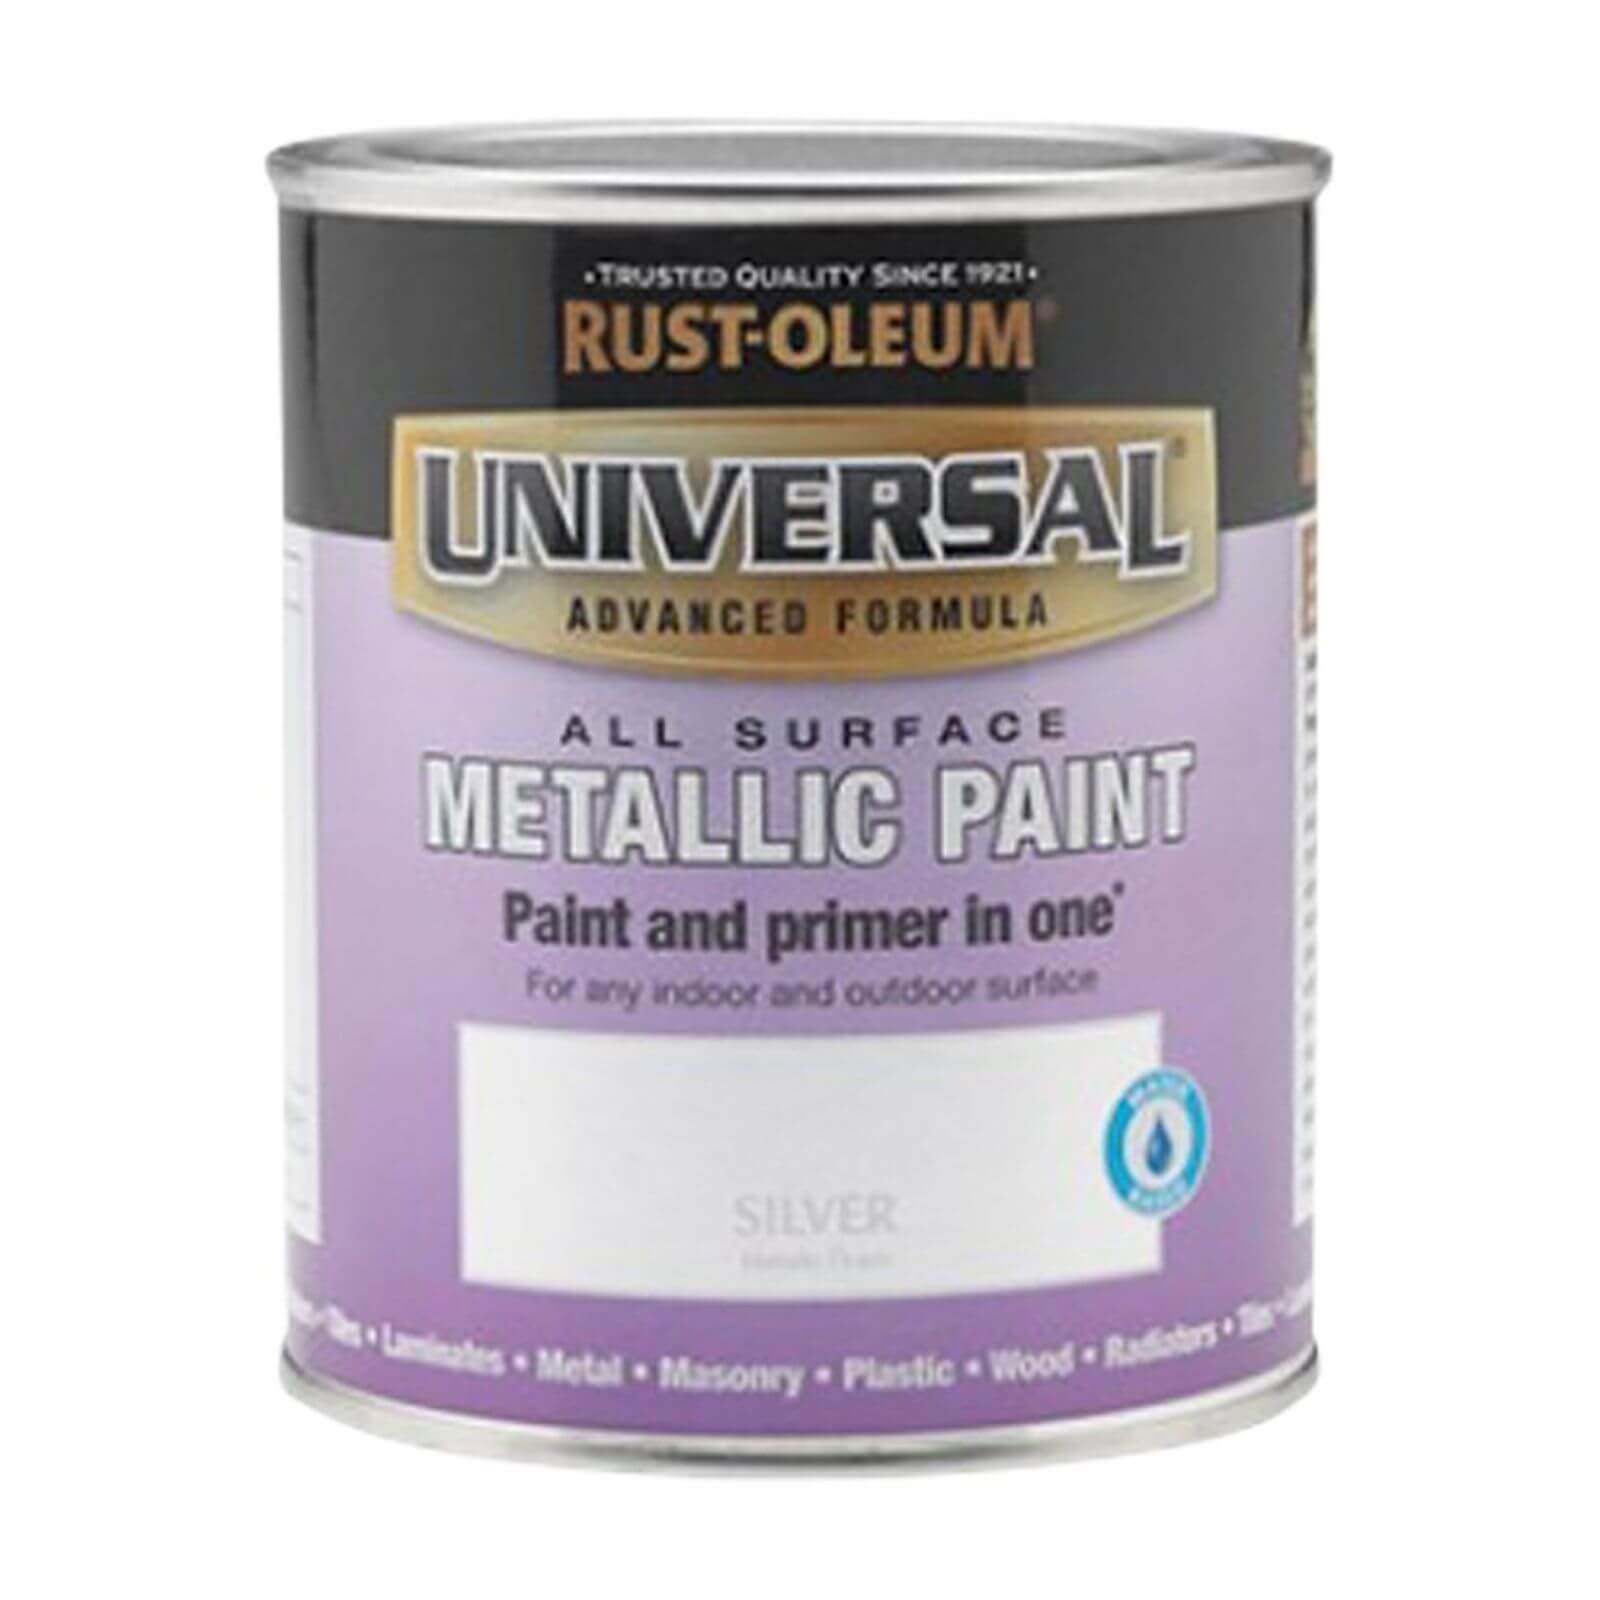 Rust-Oleum Universal All Surface Metallic Paint & Primer - Silver - 250ml